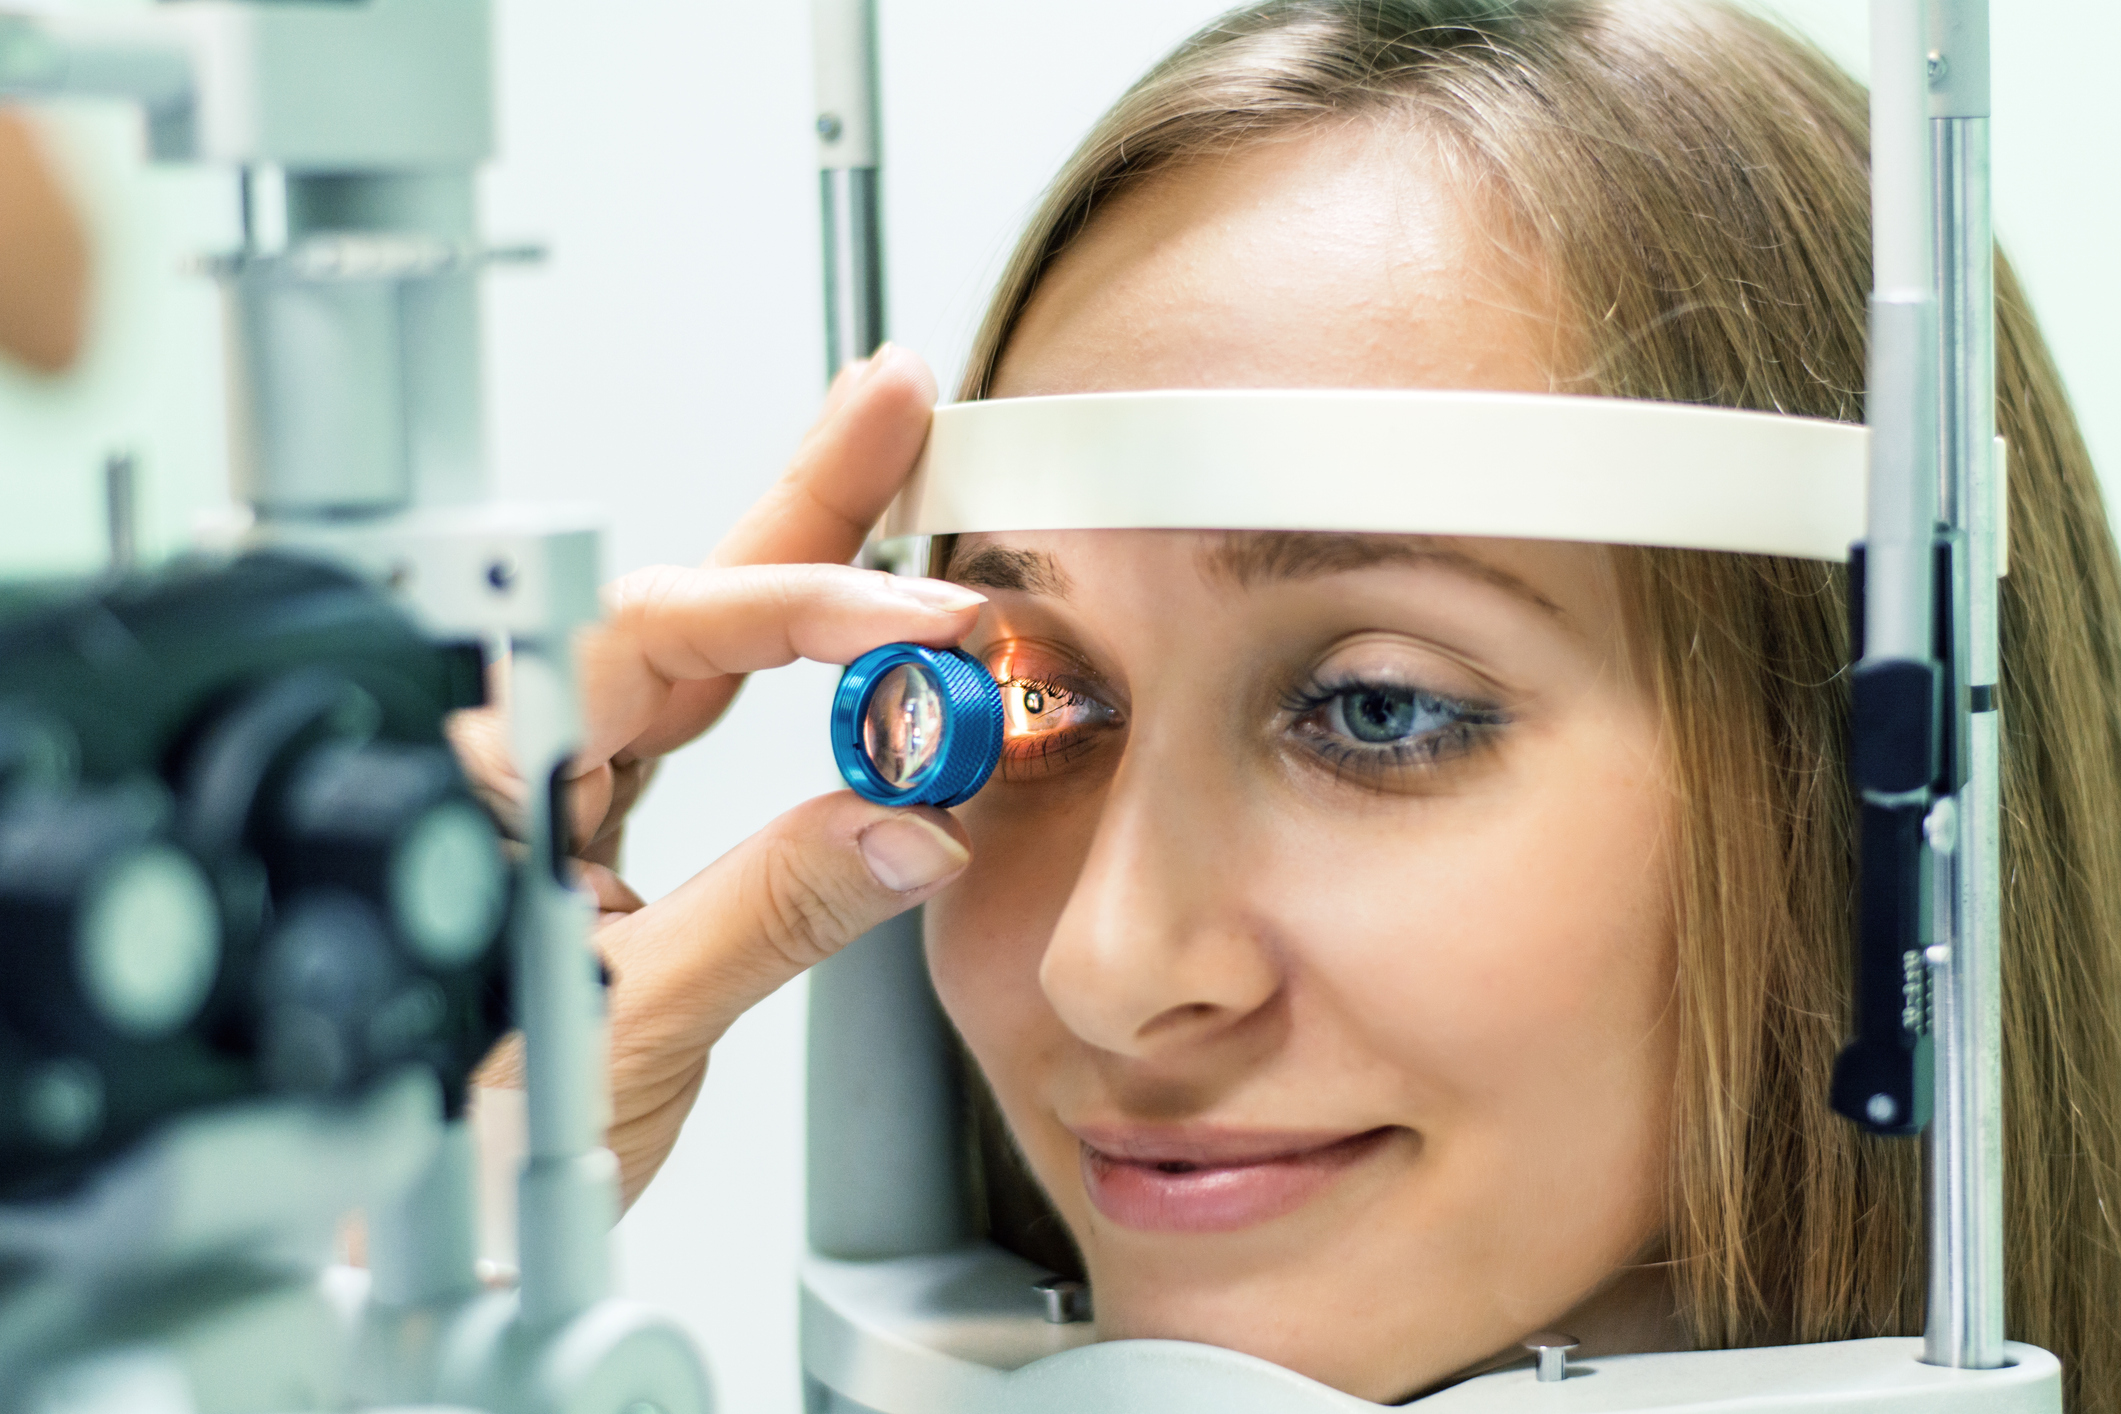 Intricacies Of Hormonal Birth Control On Eye Health